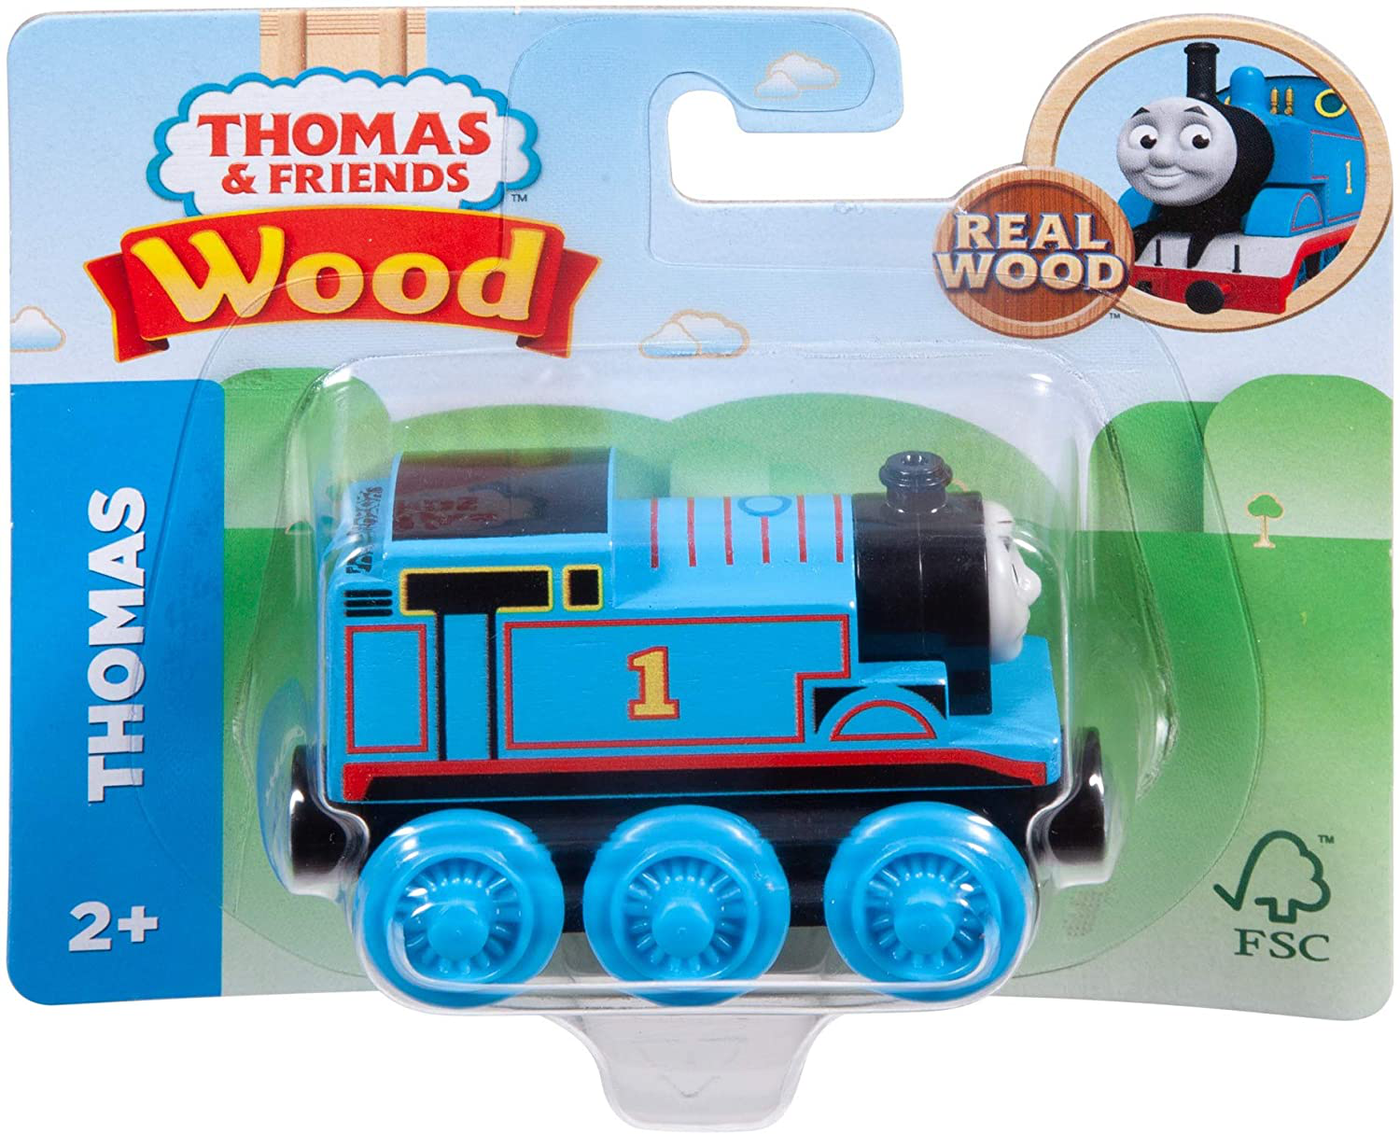 Thomas & Friends Wood, Ashima